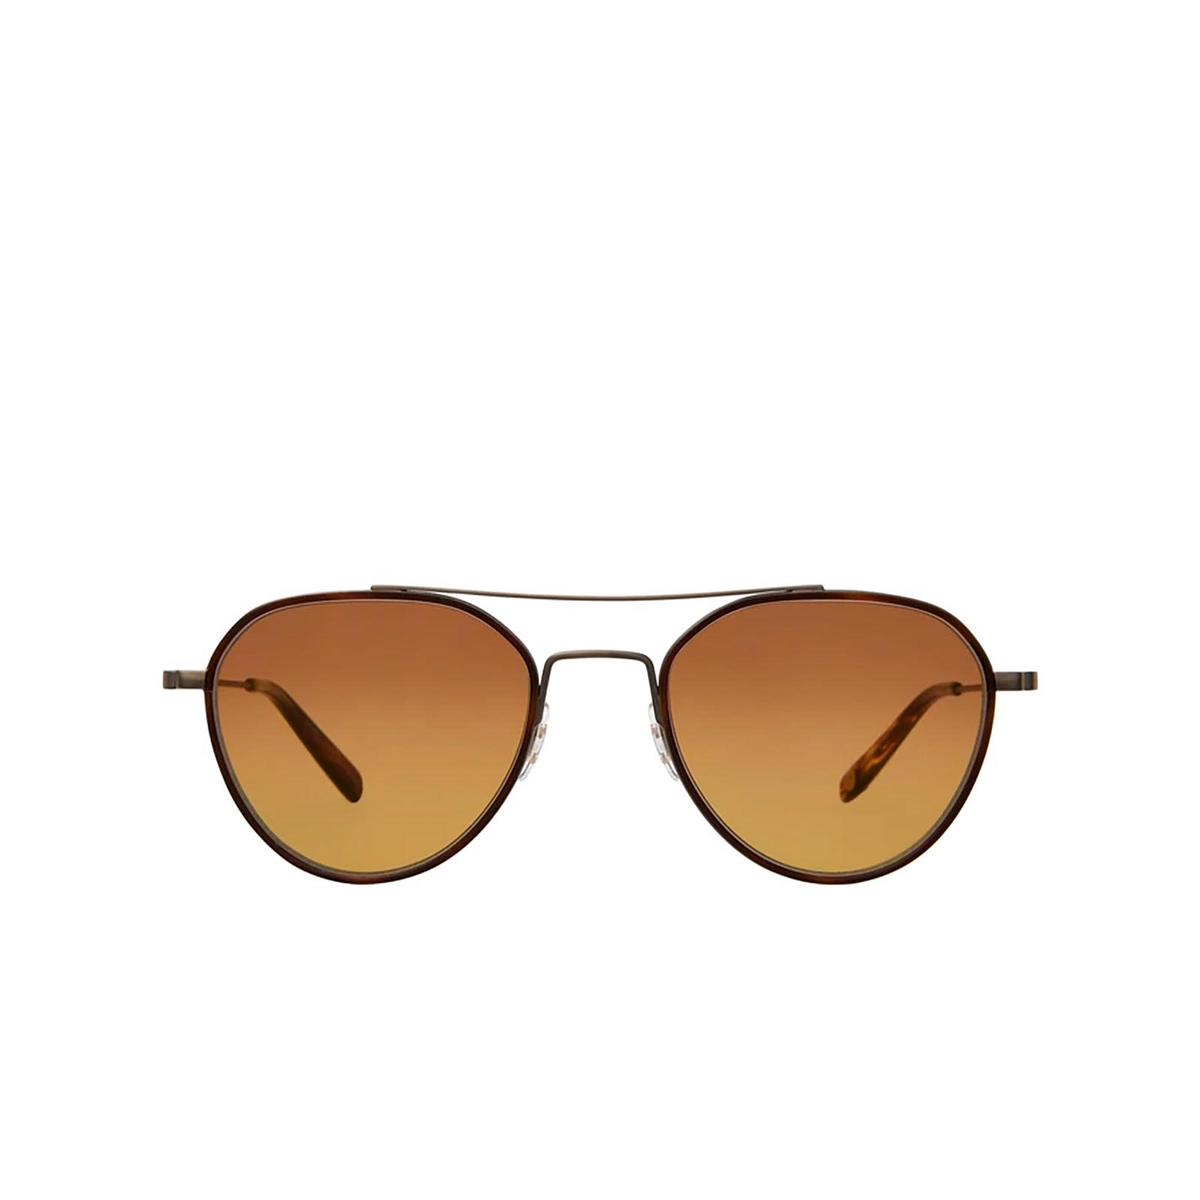 Garrett Leight® Aviator Sunglasses: San Miguel Sun color Mgt-atgii-cn-hwdg Marigold-antique Gold - front view